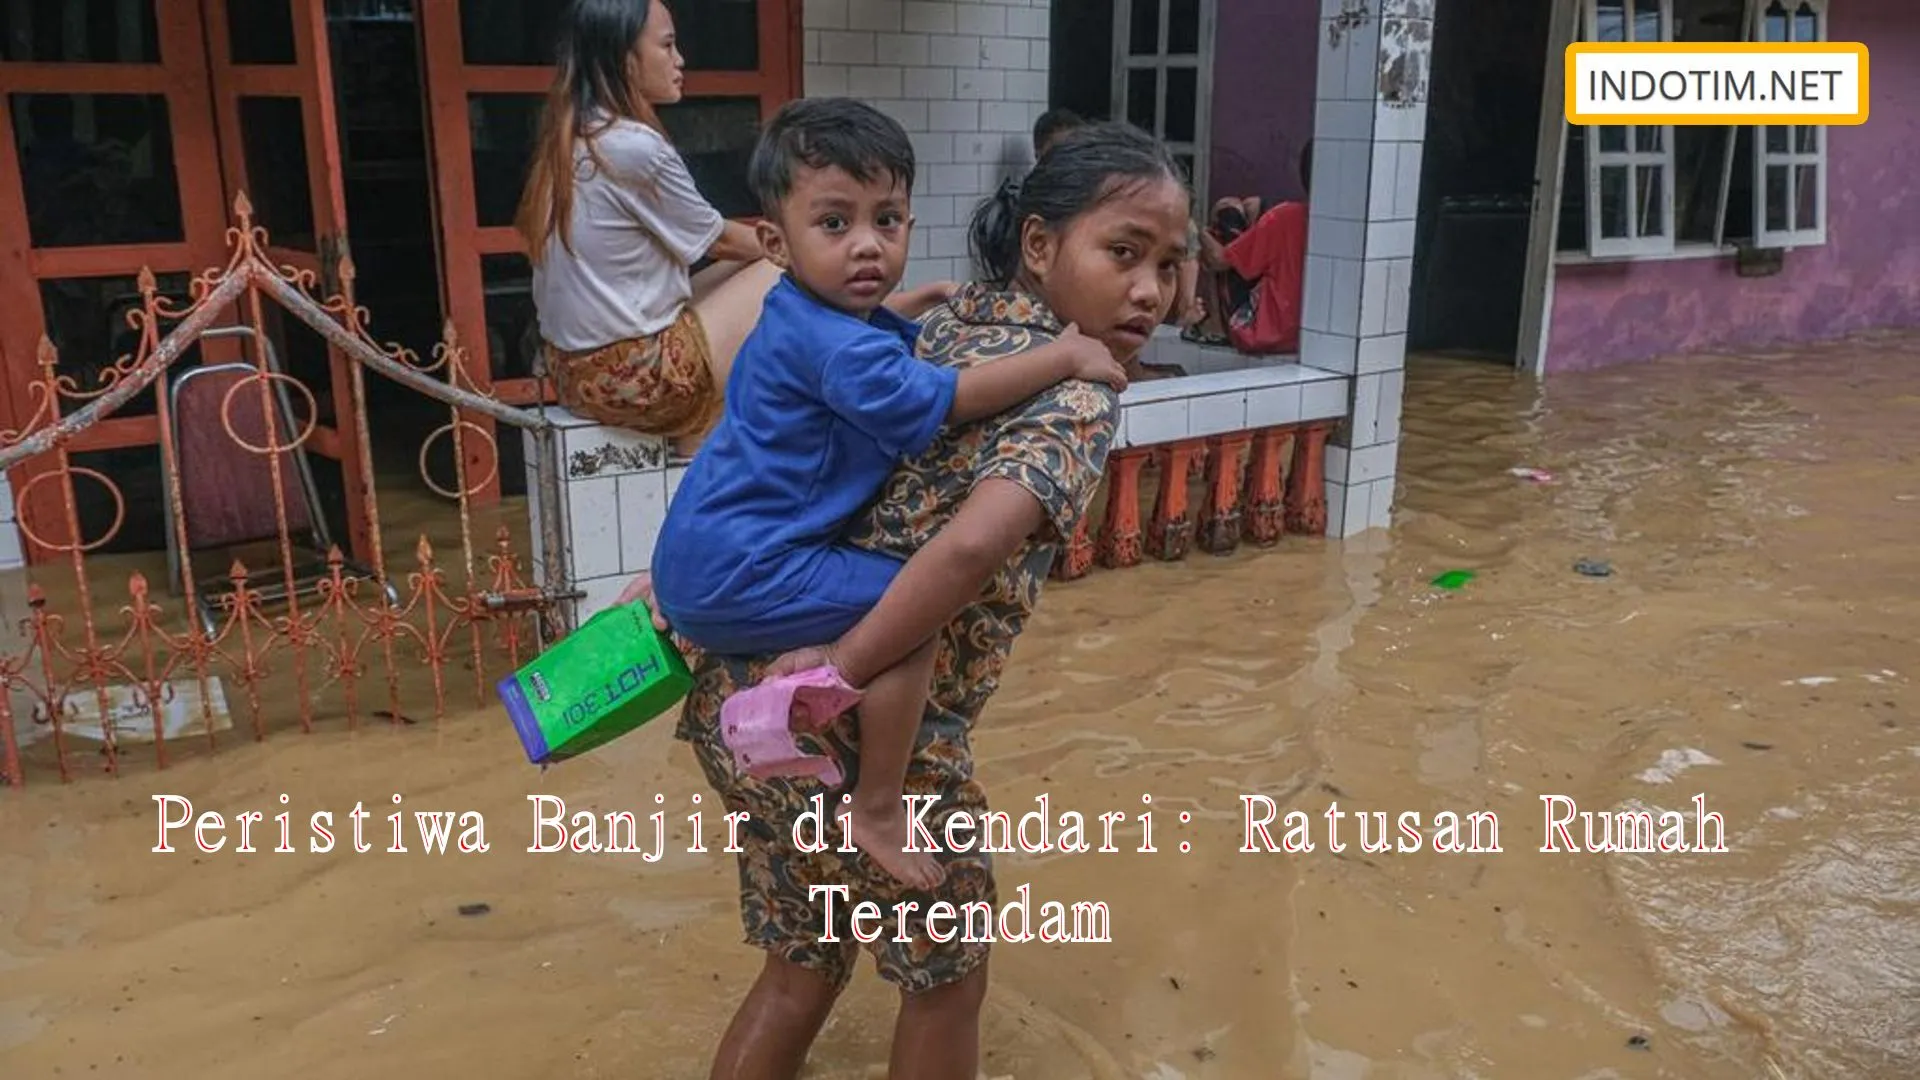 Peristiwa Banjir di Kendari: Ratusan Rumah Terendam